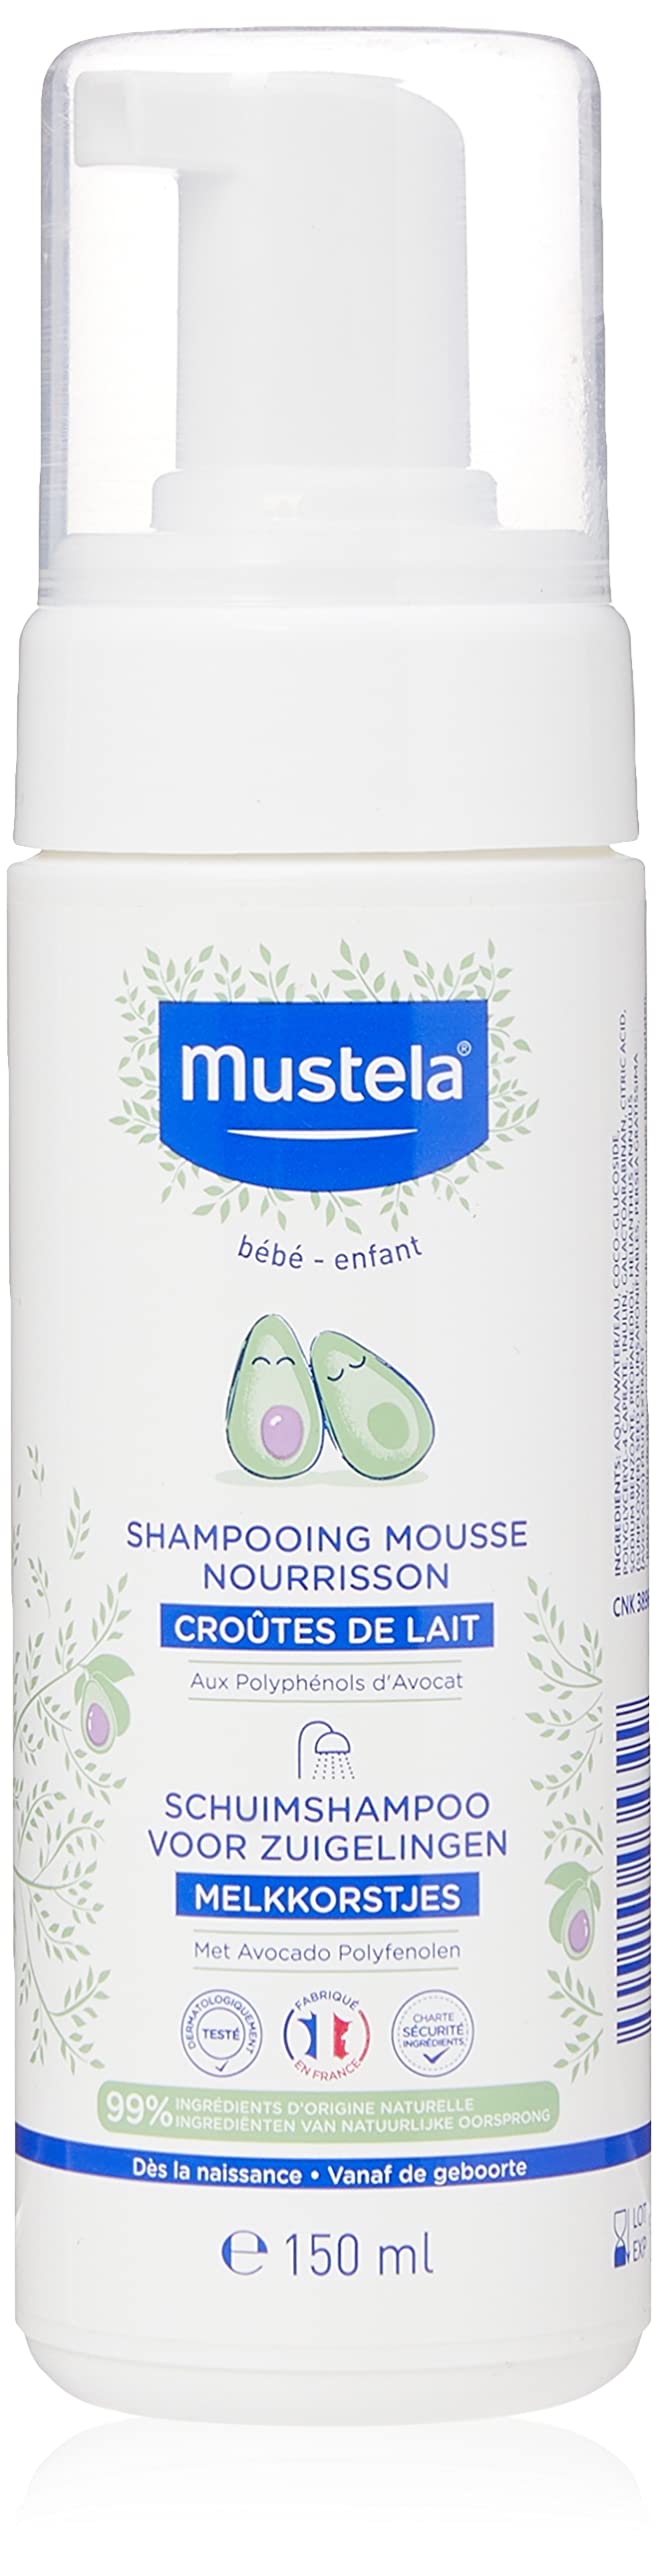 Mustela Bébé Foam Shampoo for Newborns 150ml